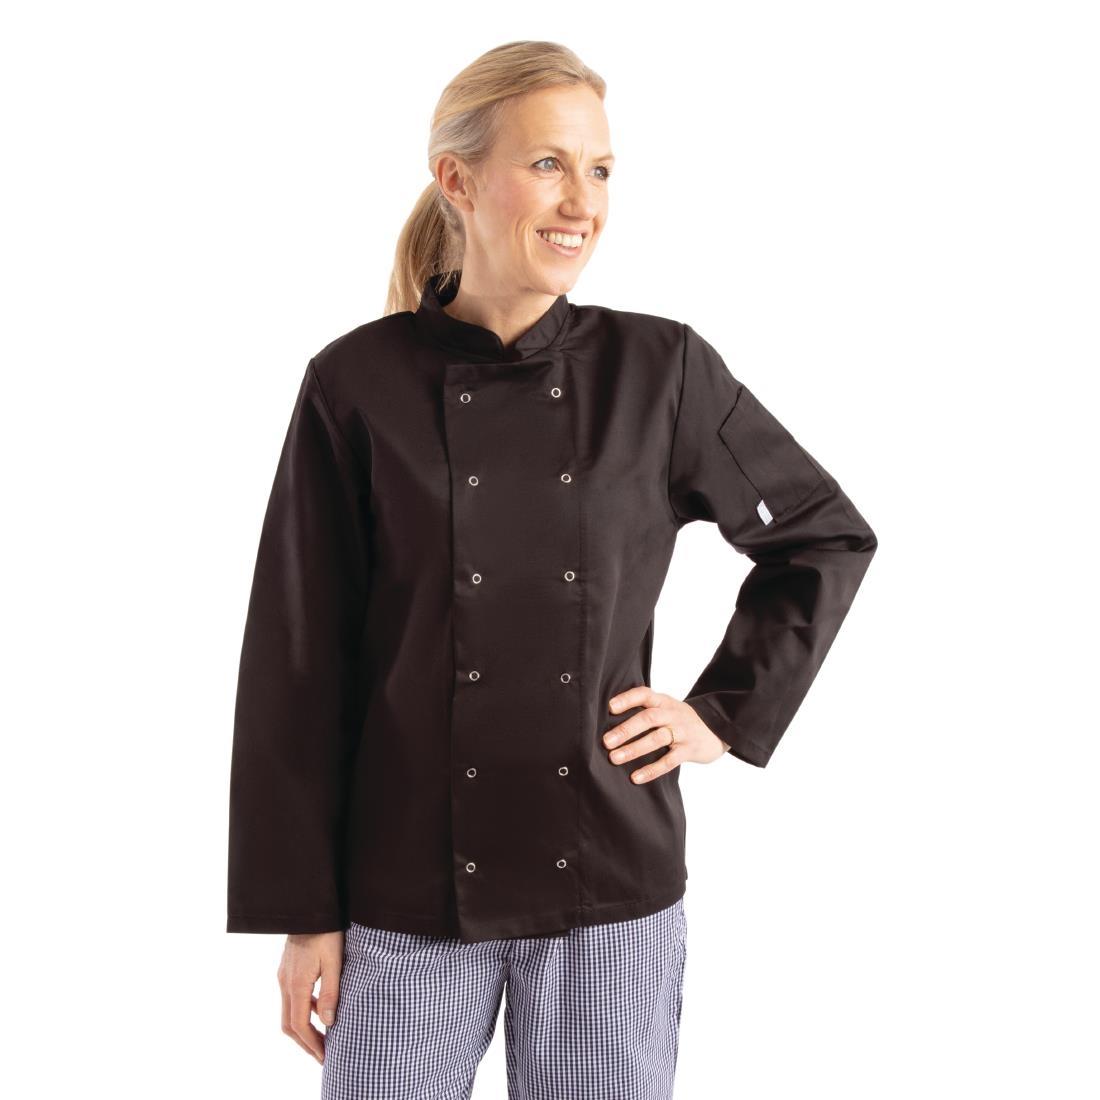 Whites Vegas Unisex Chefs Jacket Long Sleeve Black S - A438-S  - 11